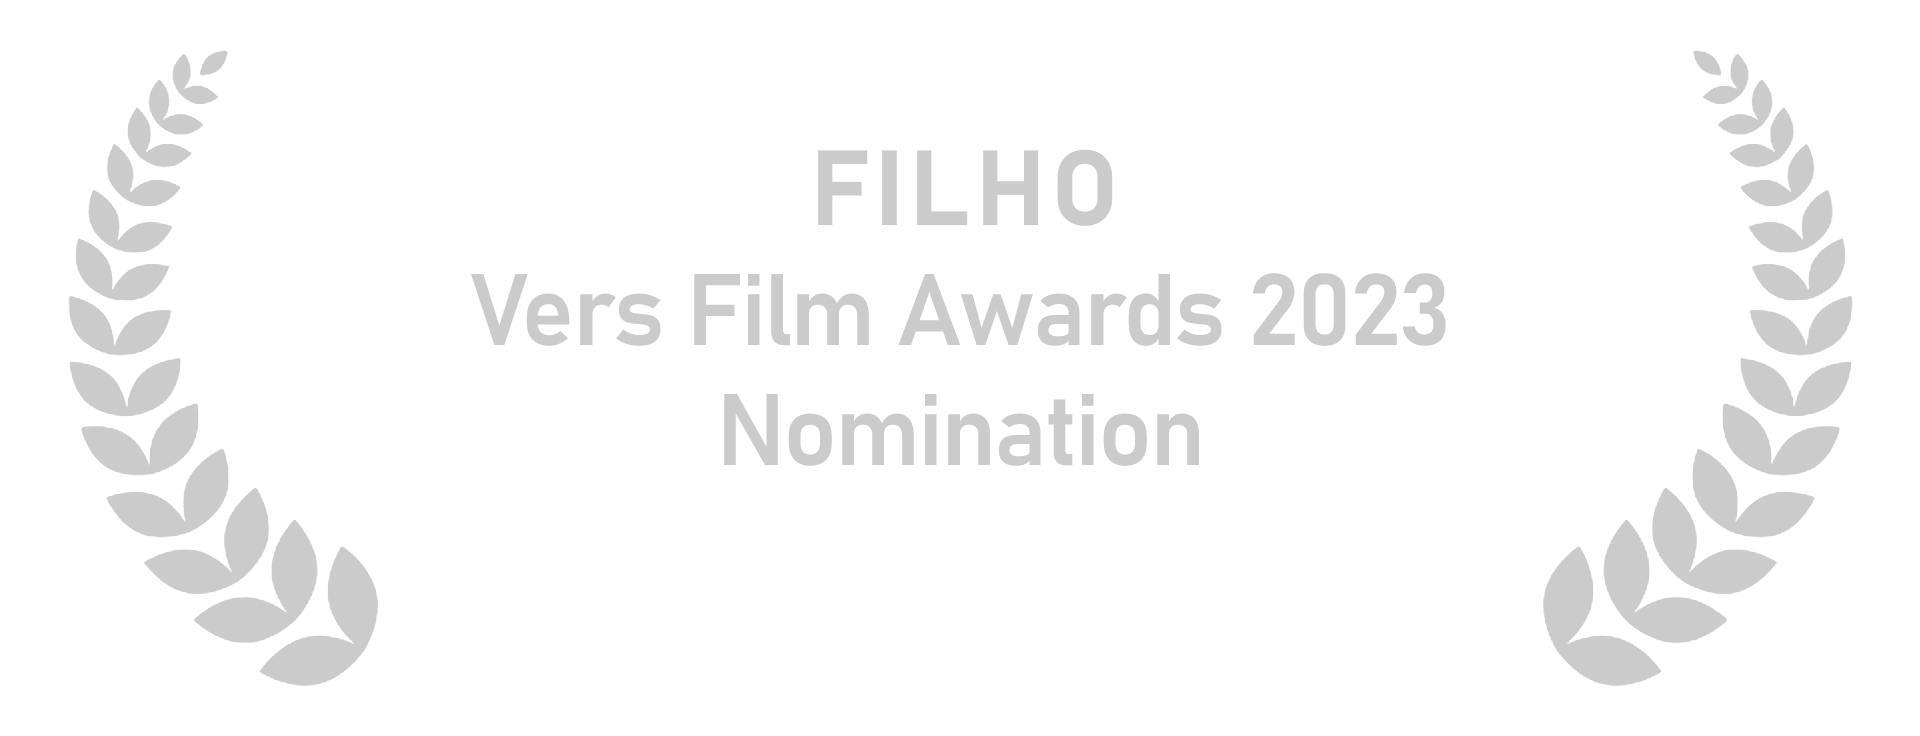 Filho Vers Film Awards 2023